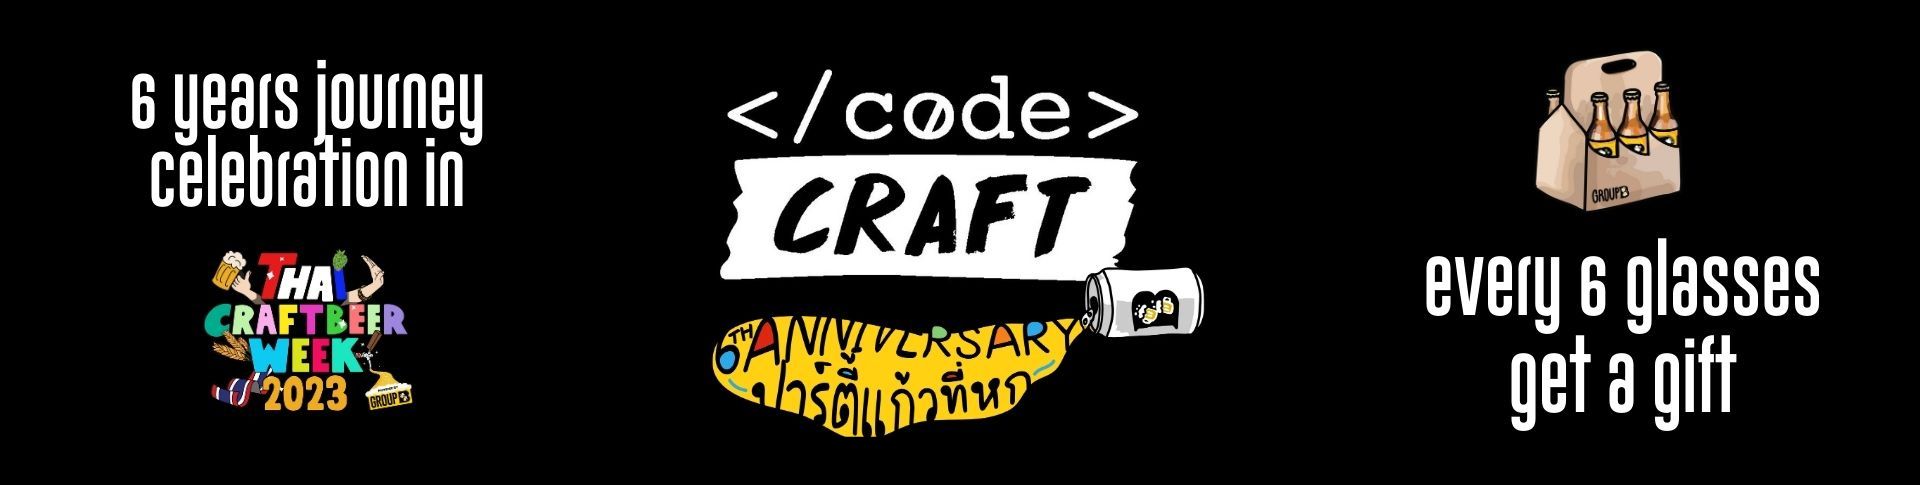 6th Anniversary ปาร์ตี้แก้วที่หก @ Code Craft